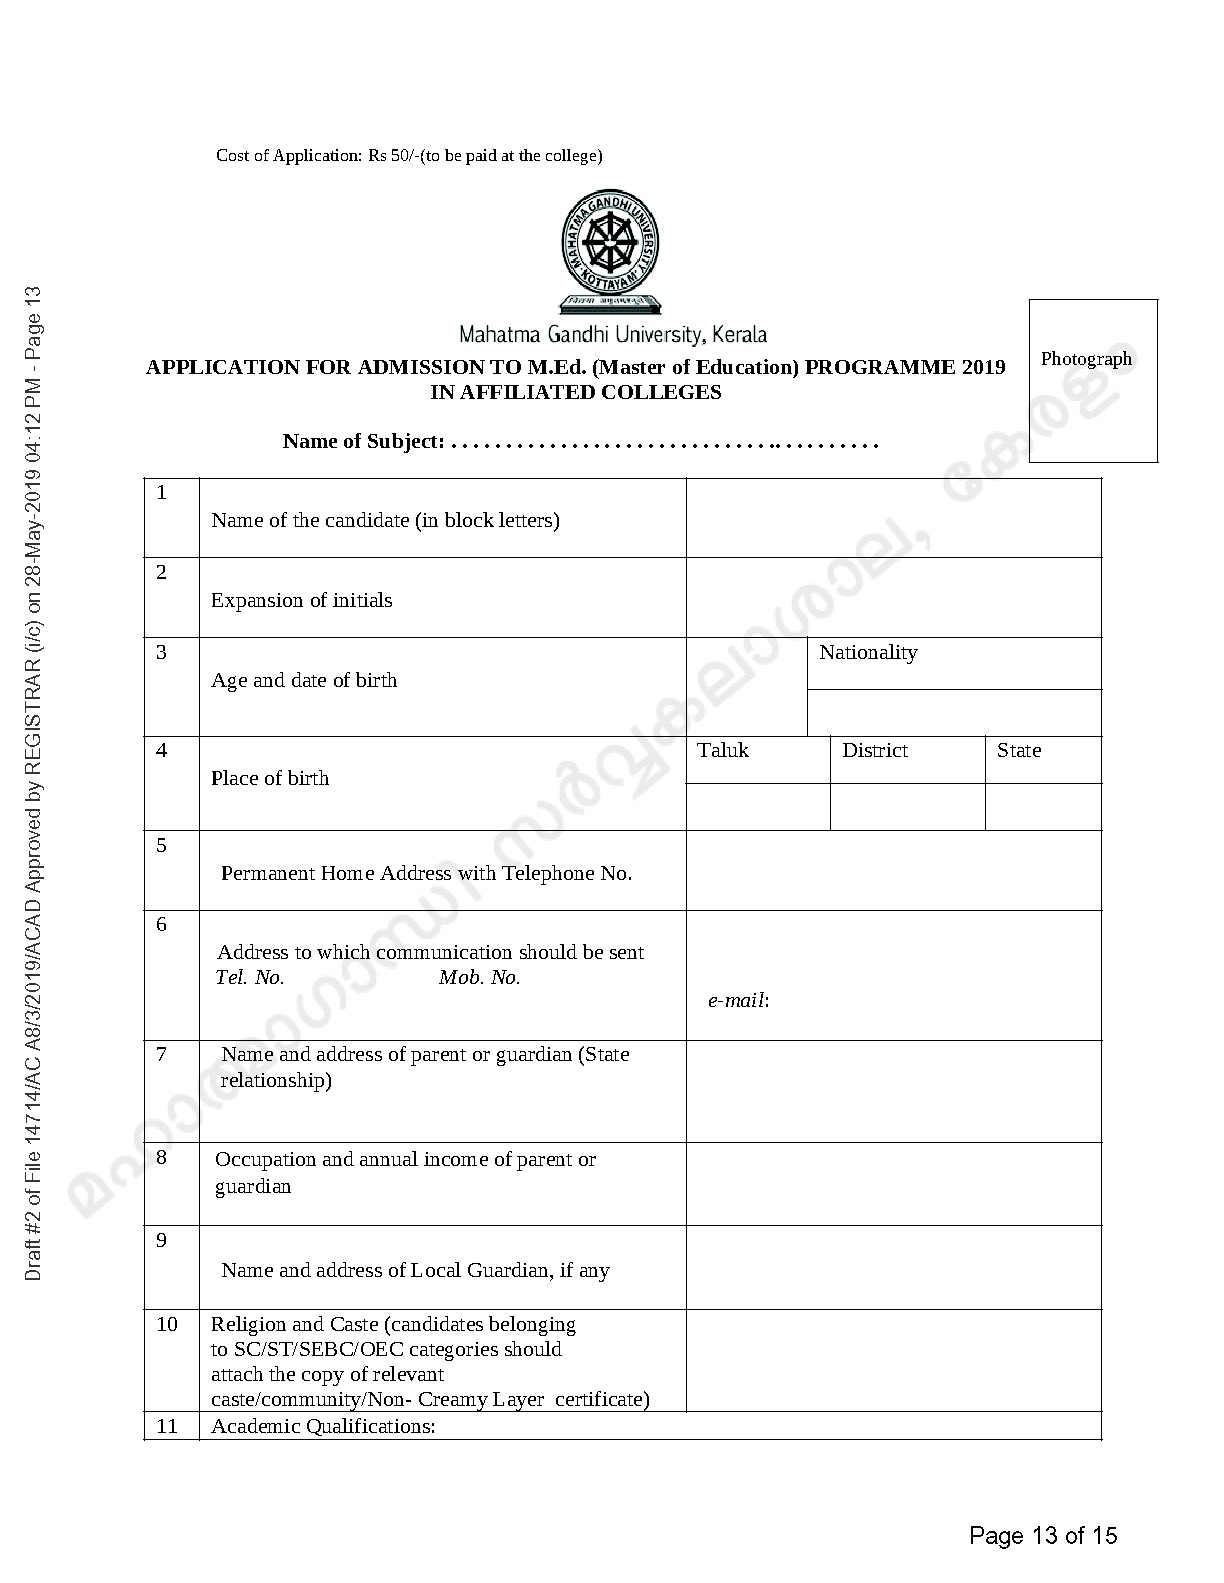 MG University M Ed Prospectus and Application form 2019 2020 - Notification Image 11